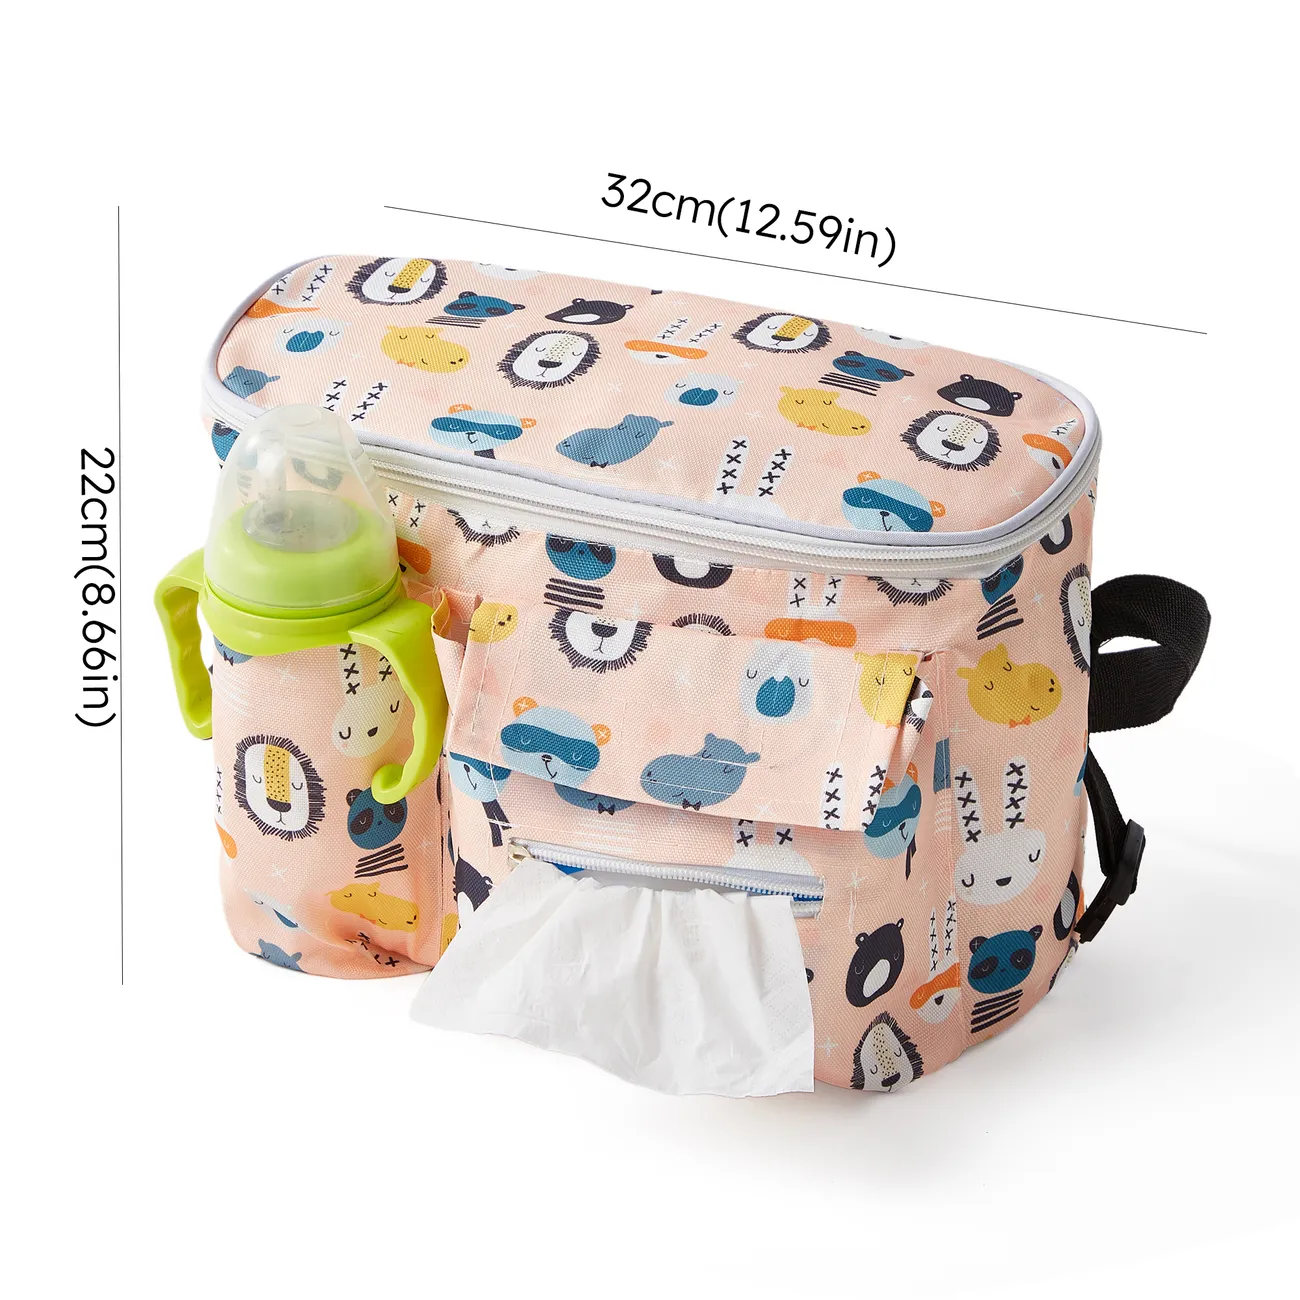 Baby Stroller Organizer Bag: Multifunctional Storage Solution for On-the-Go Moms  big image 1